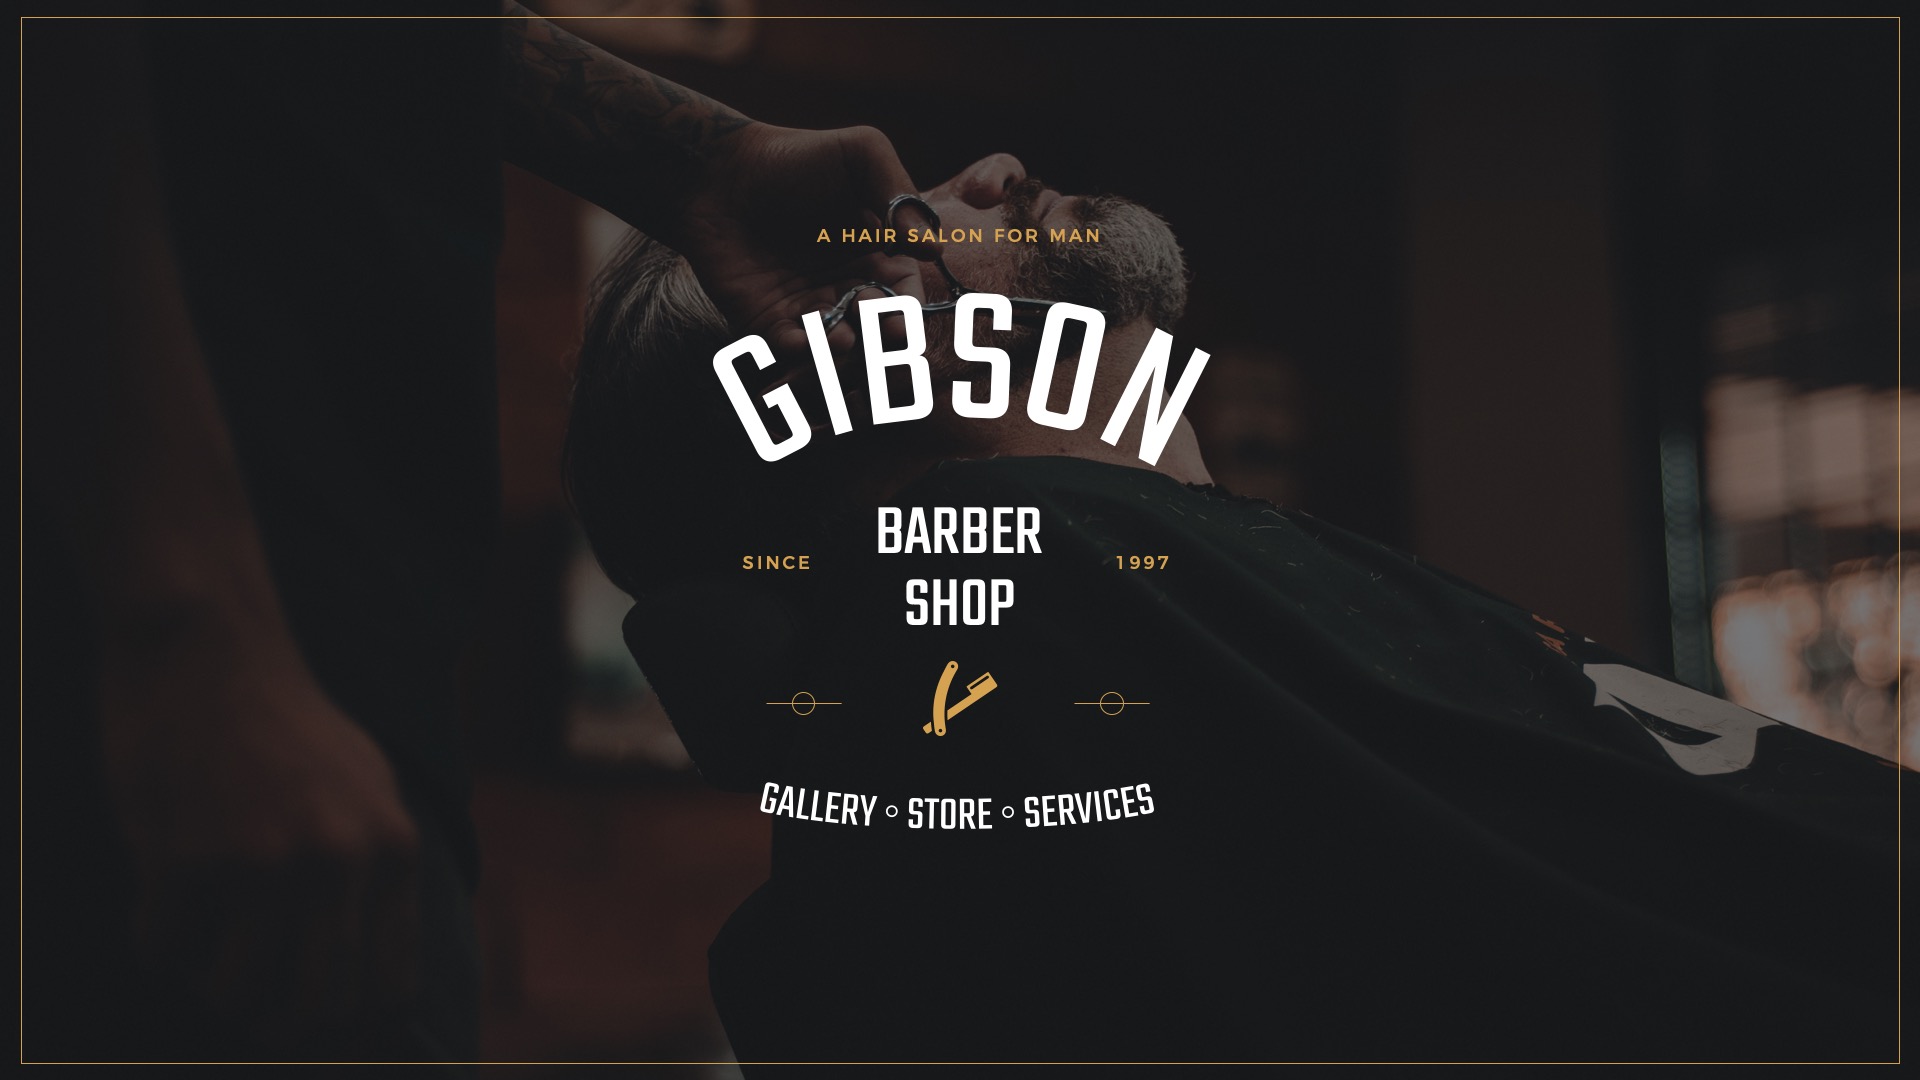 GIBSON - Barbershop & Shaving Powerpoint Template